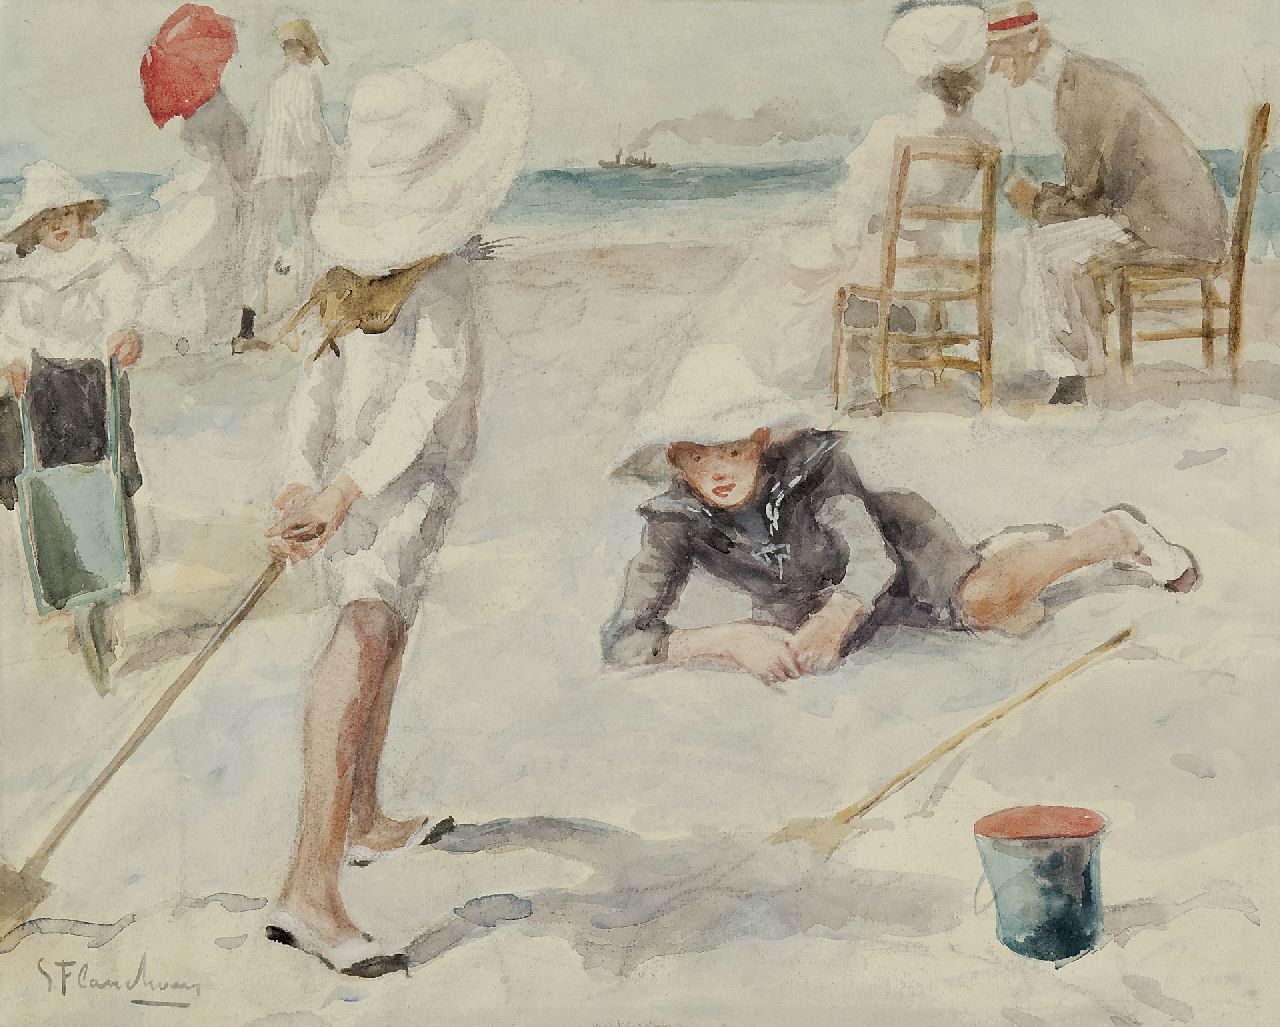 Flasschoen G.  | Gustave Flasschoen, On the beach, watercolour on paper 35.1 x 43.4 cm, signed l.l.